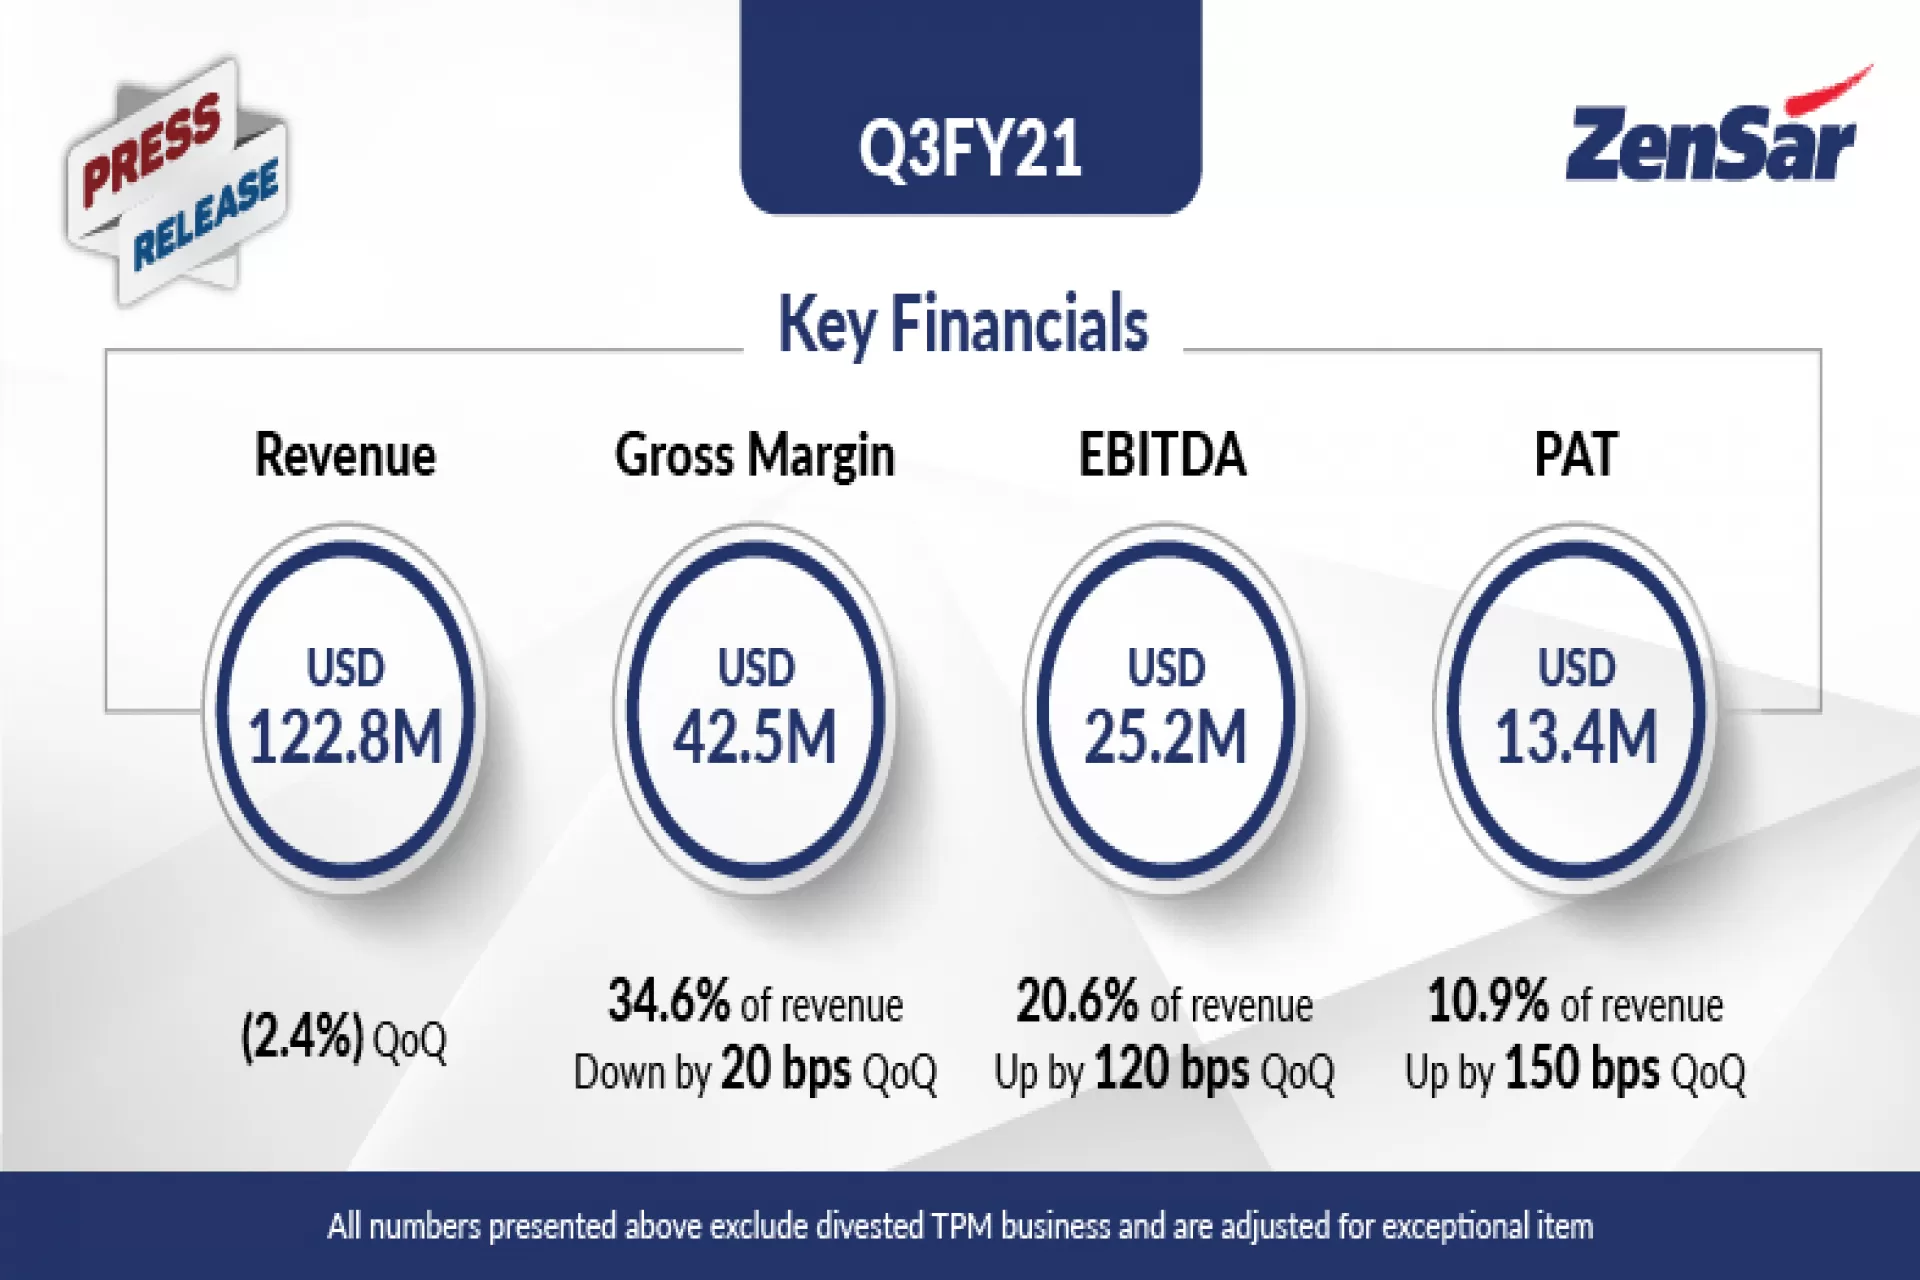 Zensar reports PAT at 10.9% in Q3FY21 